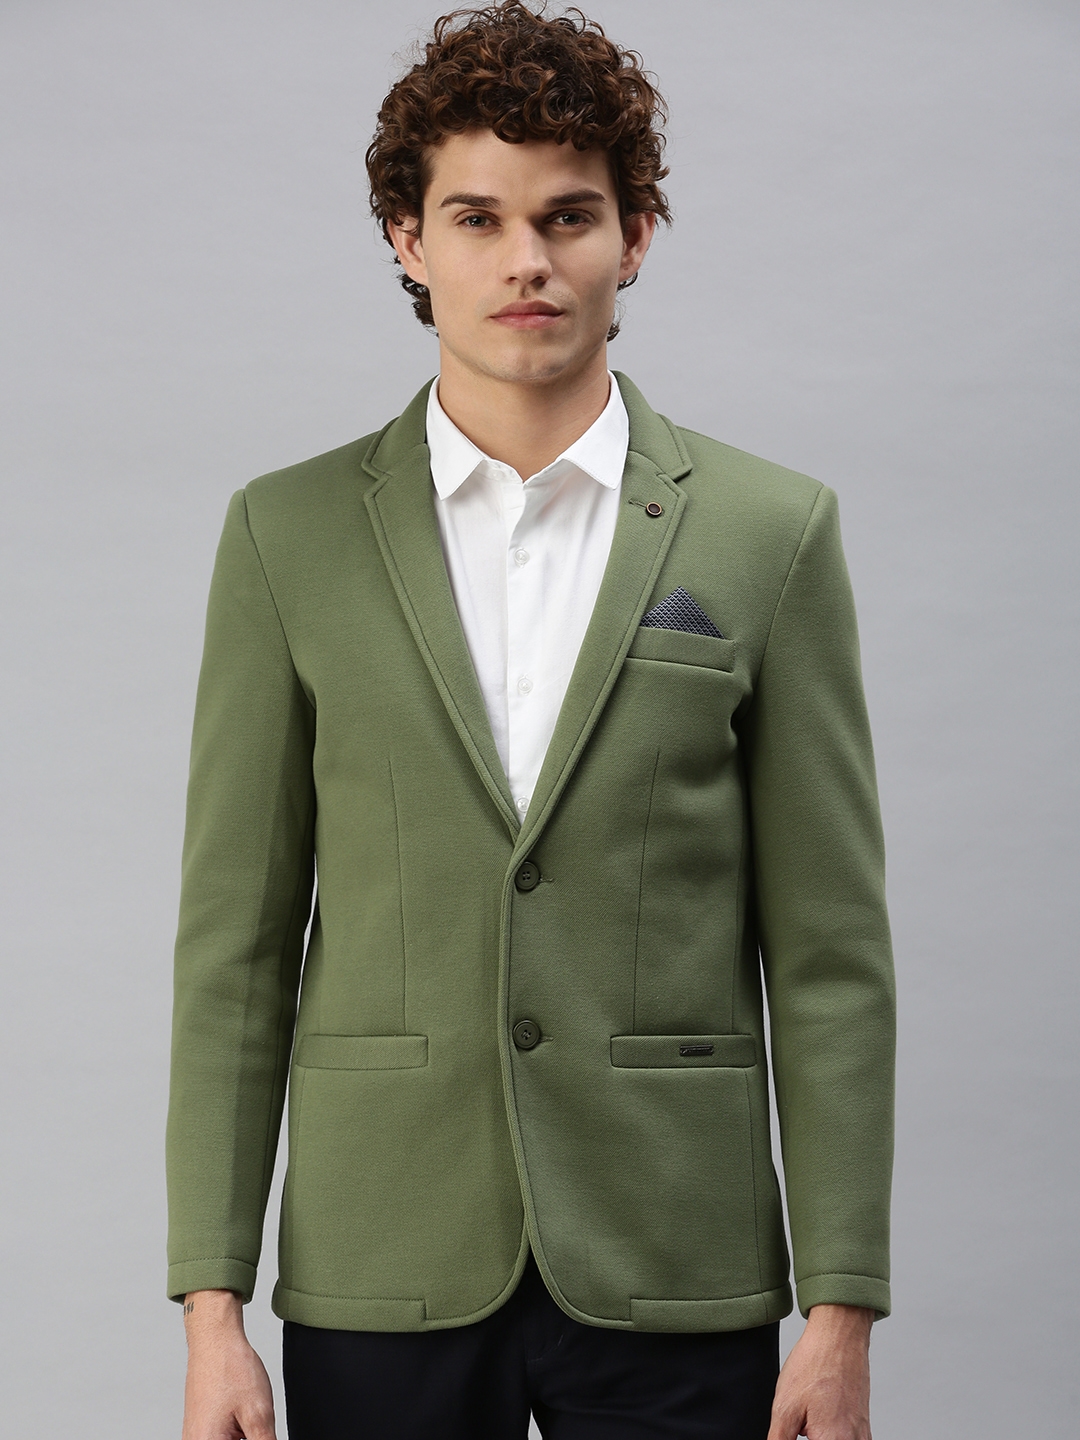 Men's Green Cotton Blend Solid Blazers